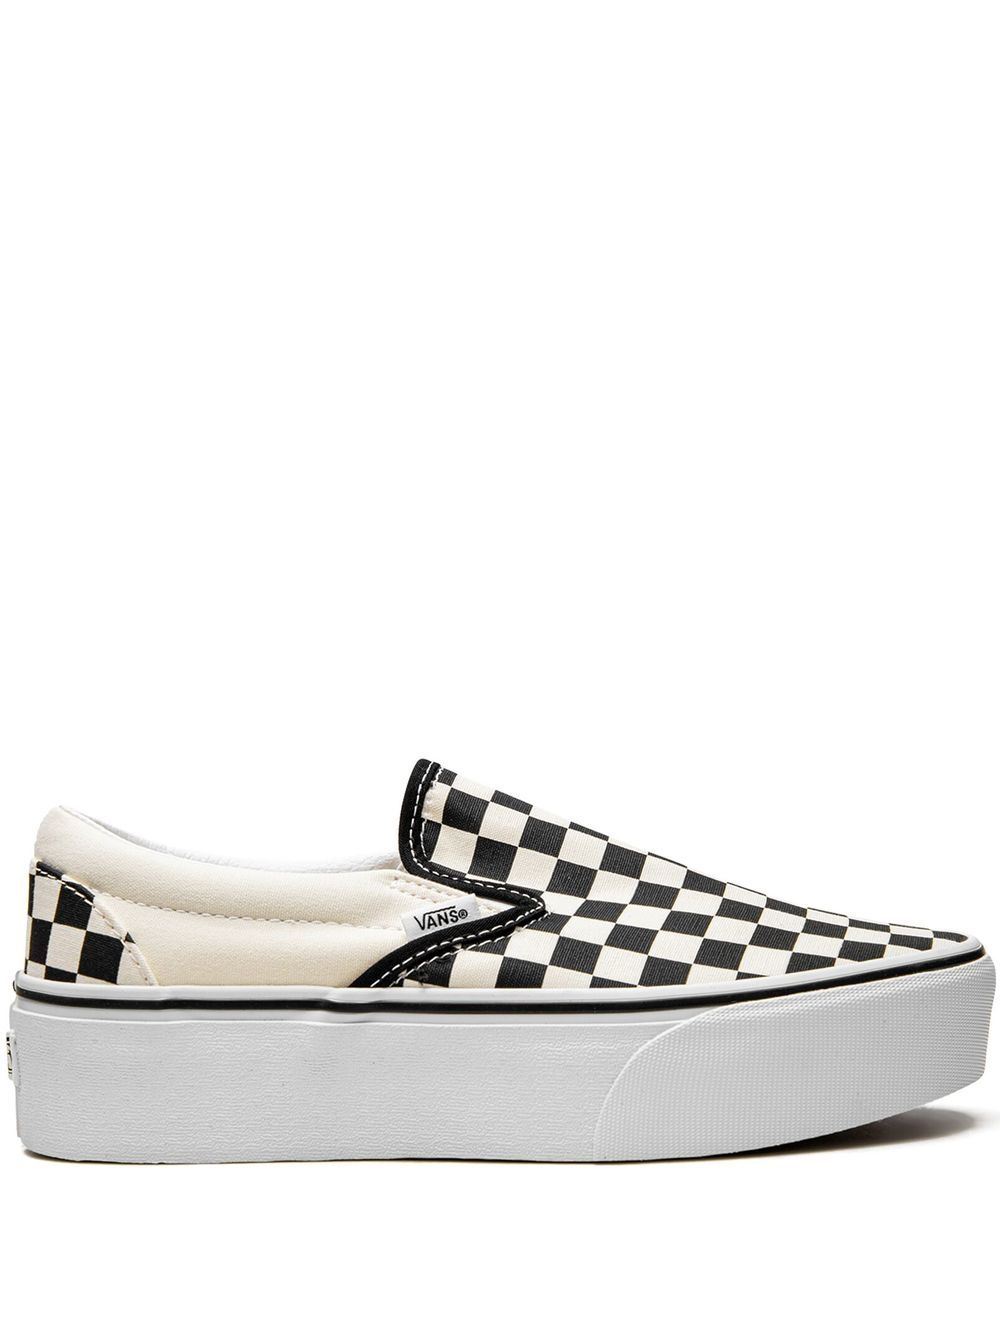 Image 1 of Vans Slip-On Stackform "Checkerboard" sneakers